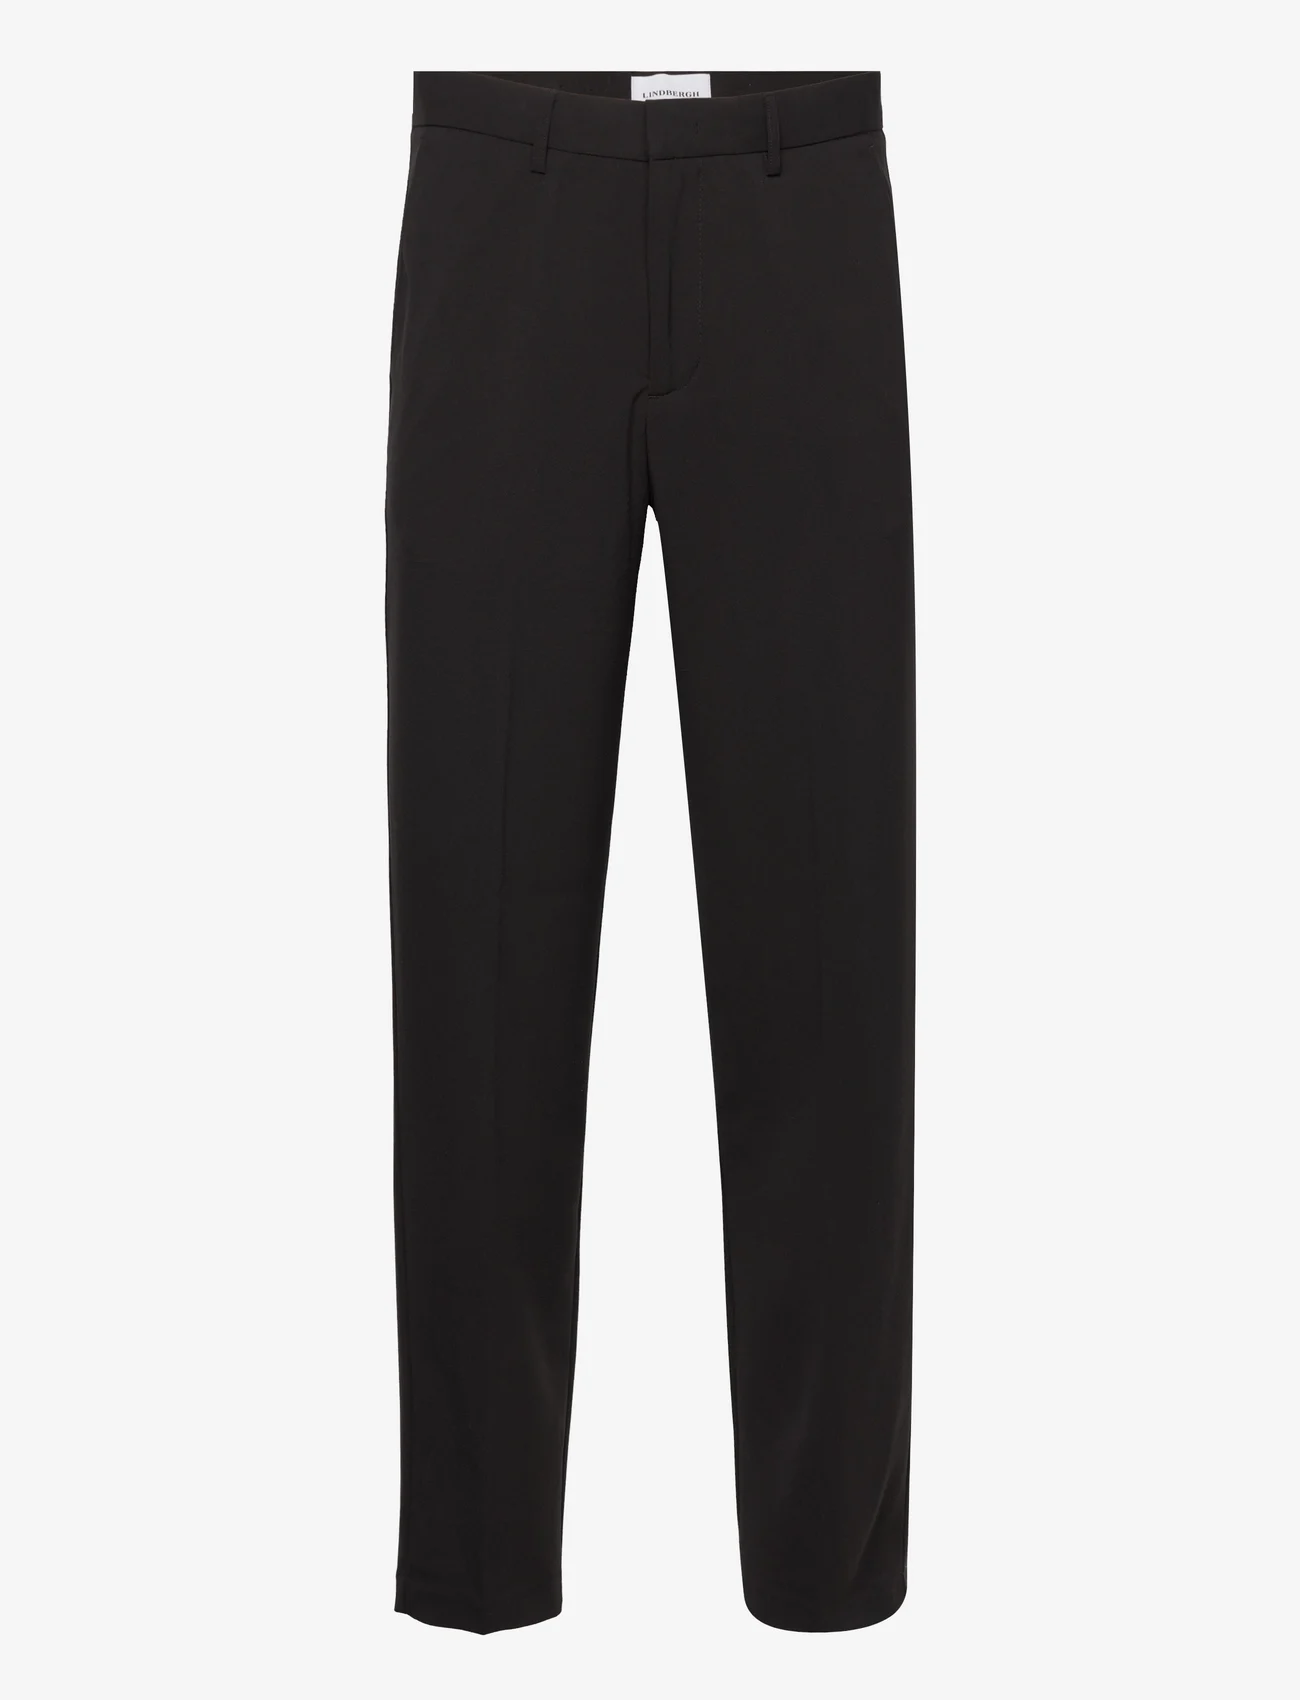 Lindbergh - Relaxed fit formal pants - puvunhousut - black - 0